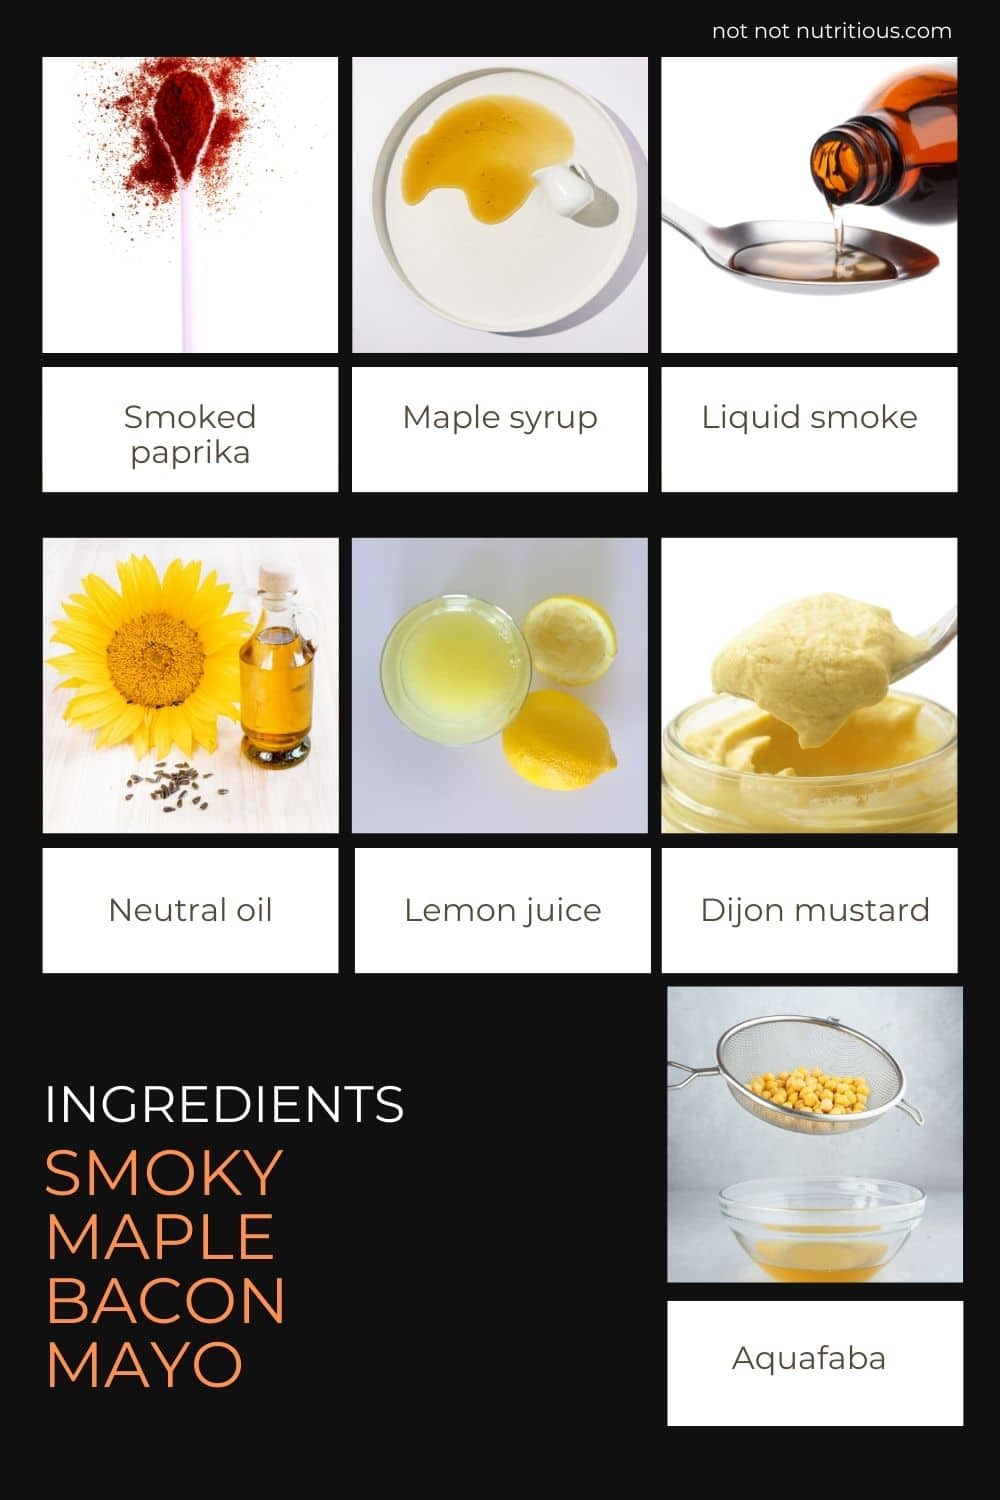 Ingredients for Smoky Maple Bacon Mayonnaise - Vegan. Smoked paprika, maple syrup, liquid smoke, sunflower oil, lemon juice, dijon mustard, and aquafaba